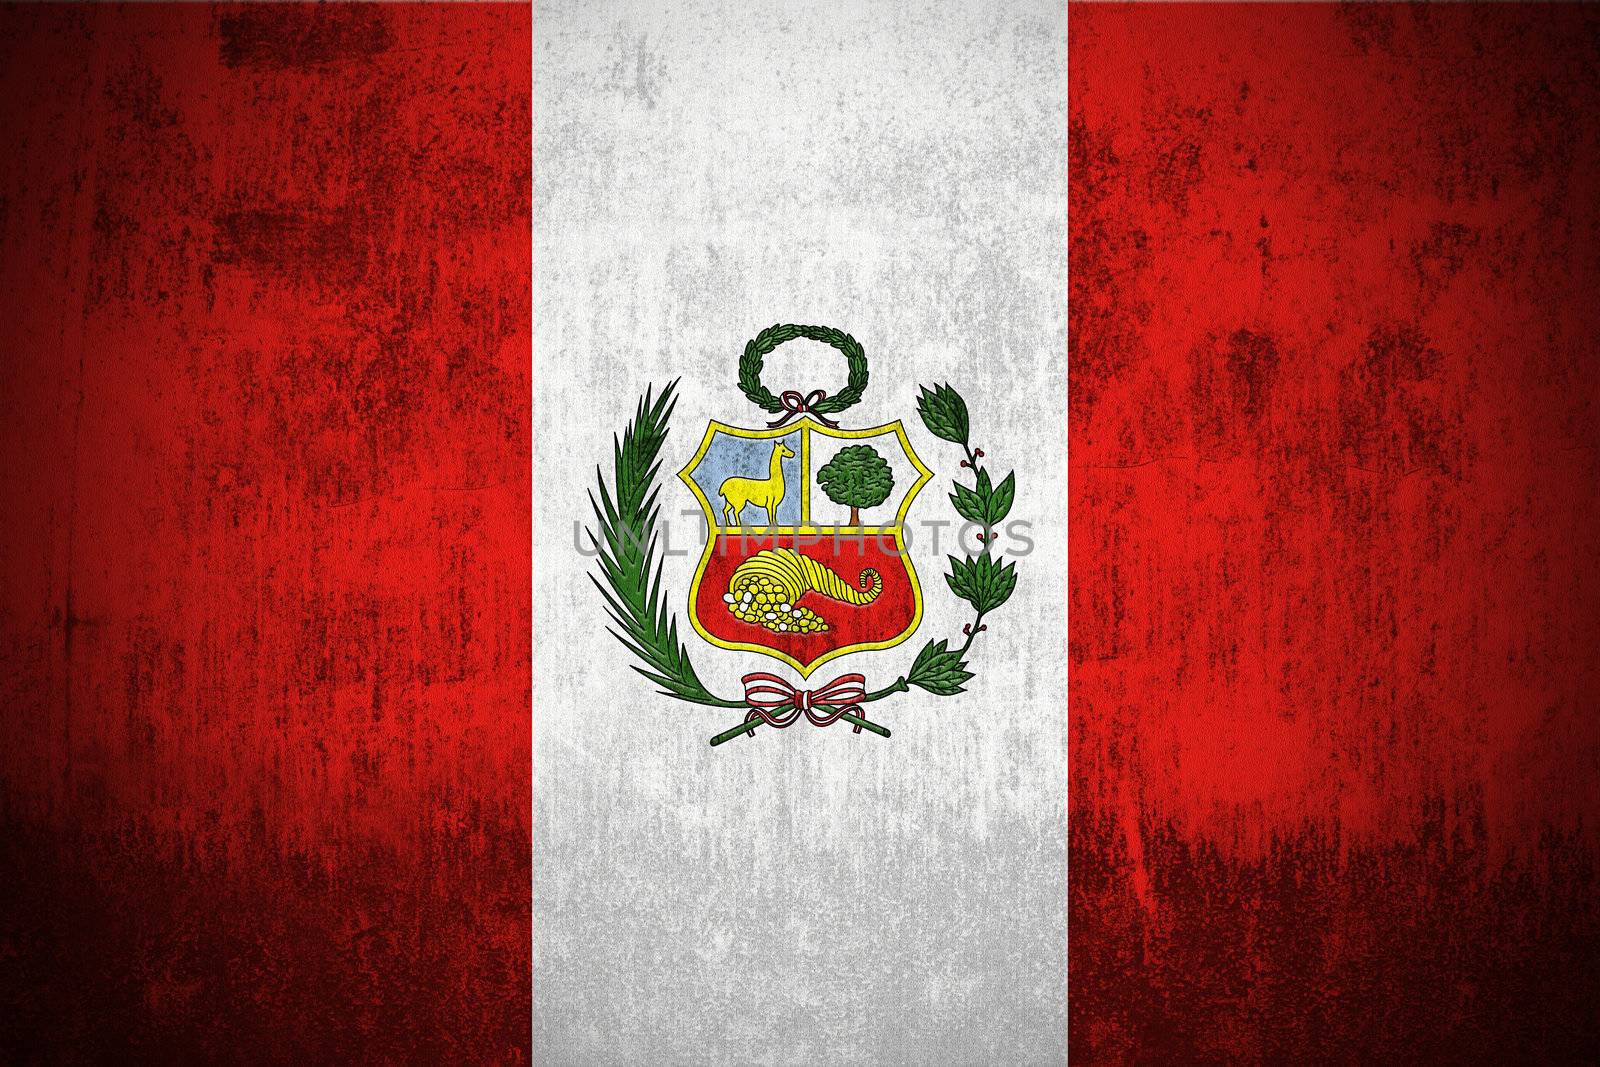 Weathered Flag Of Peru, fabric textured
